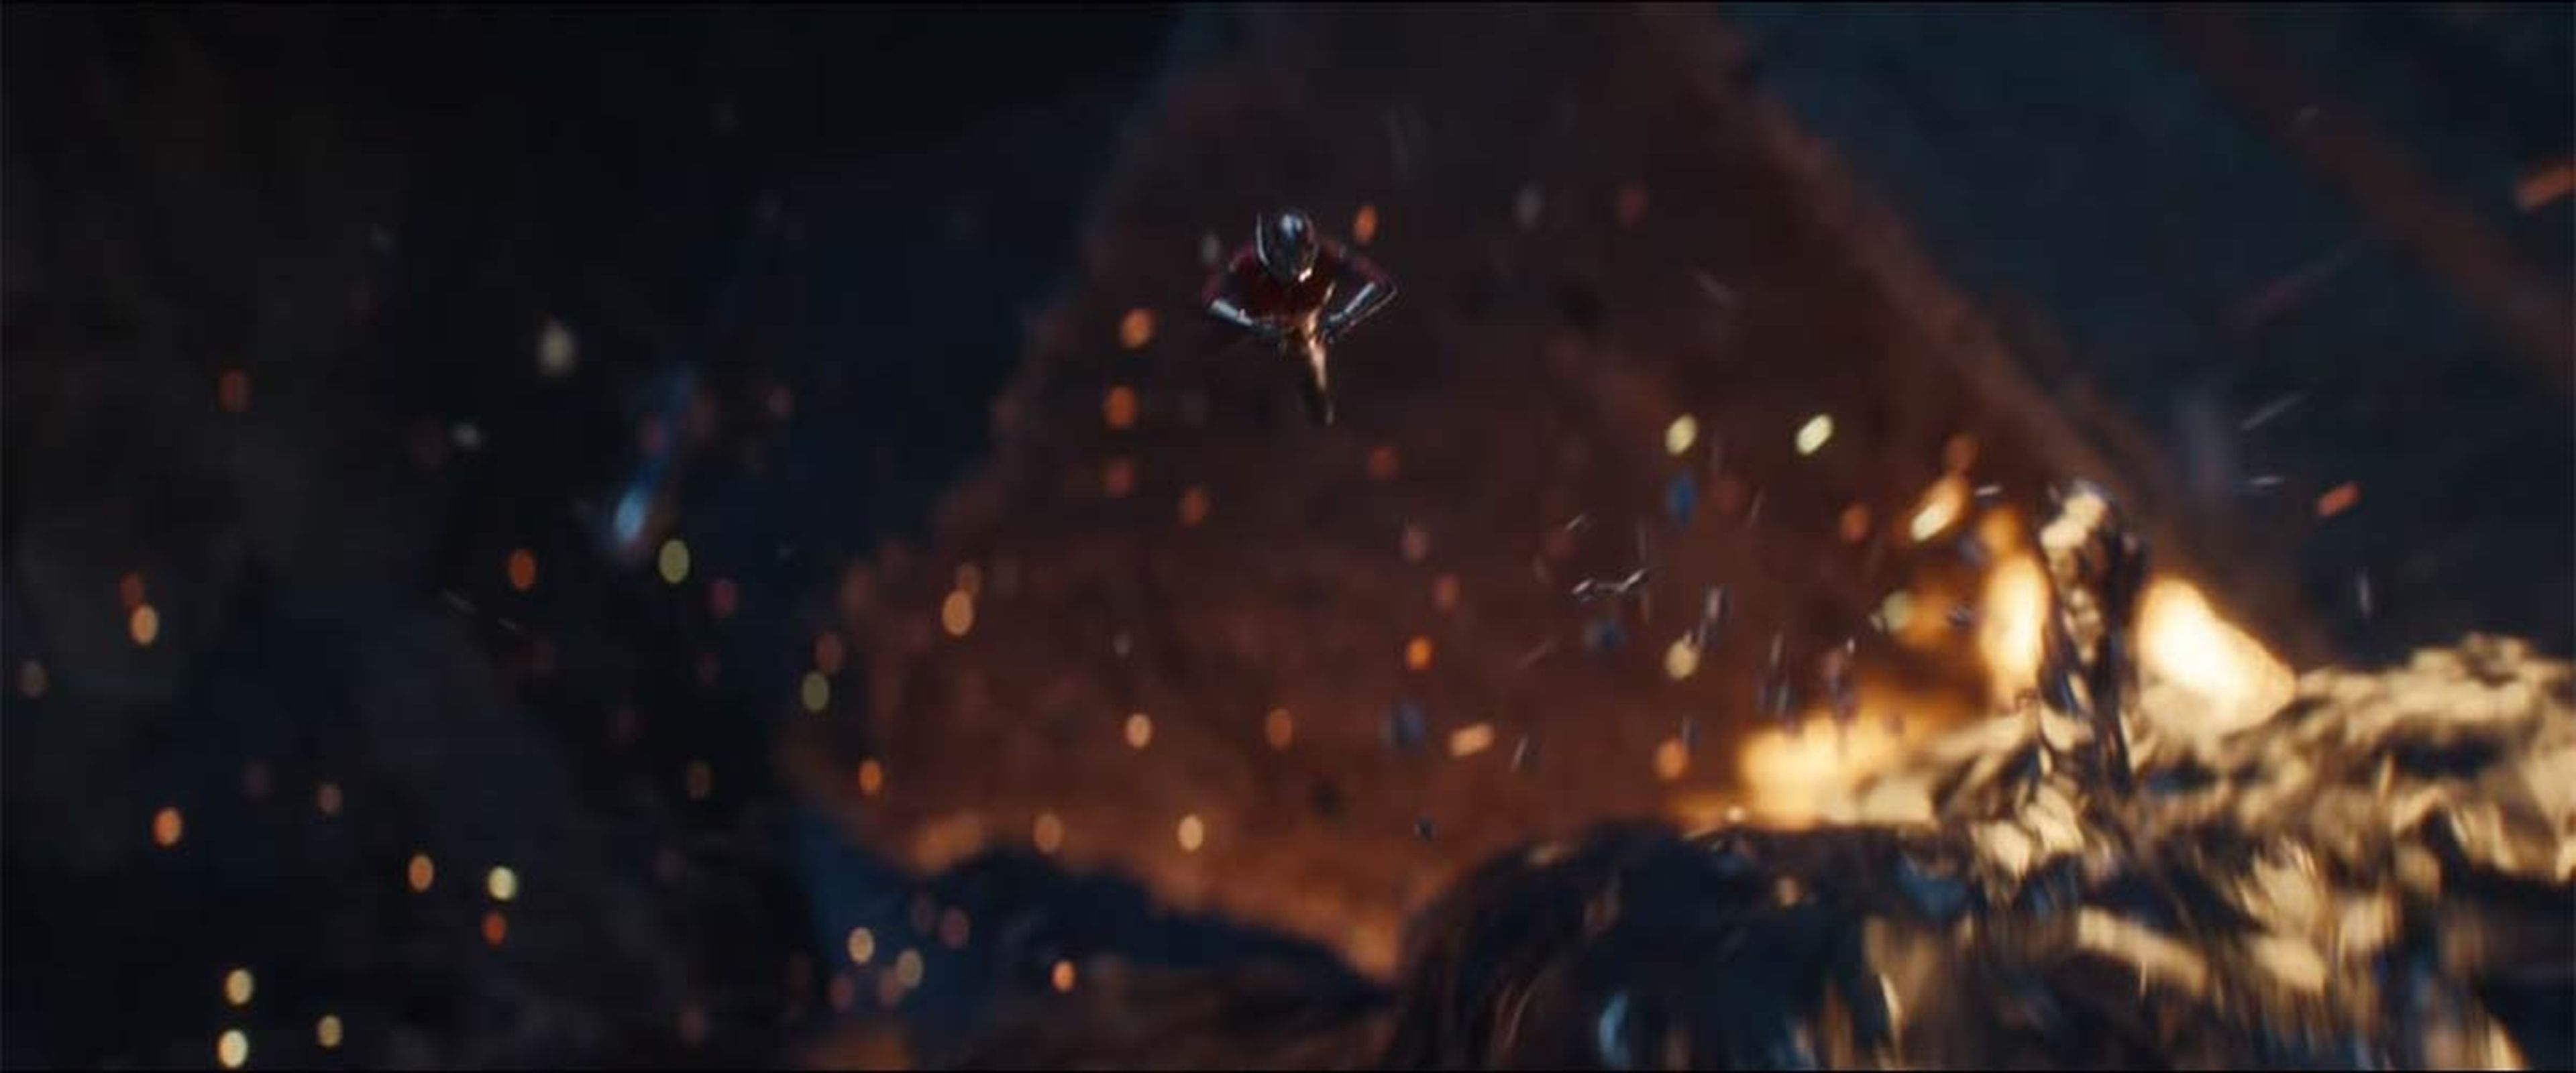 Ant-man en el tráiler de Vengadores: Endgame